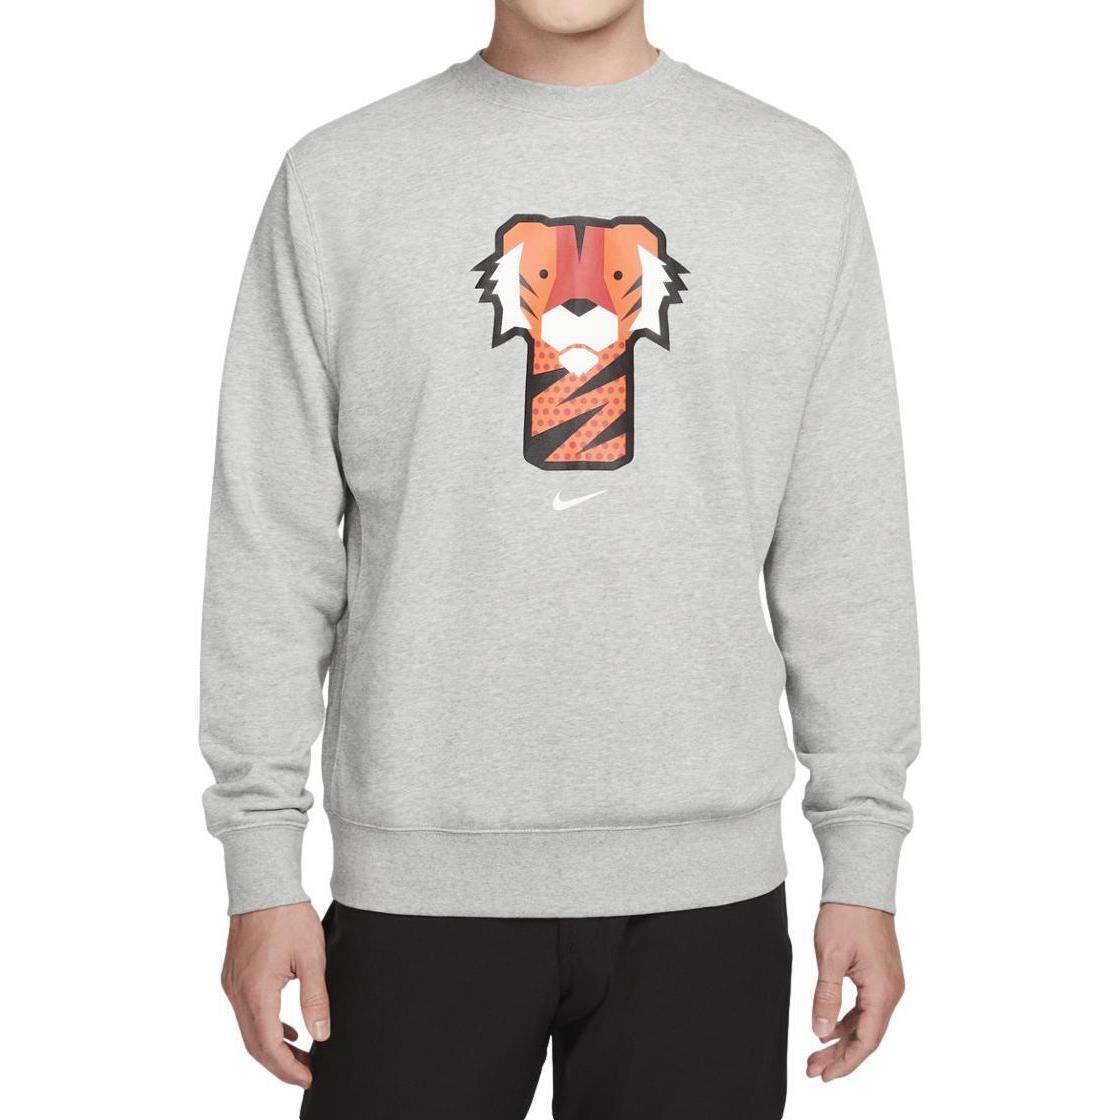 Nike Tiger Woods `frank` Graphic Crew Neck Sweatshirt DN1961-063